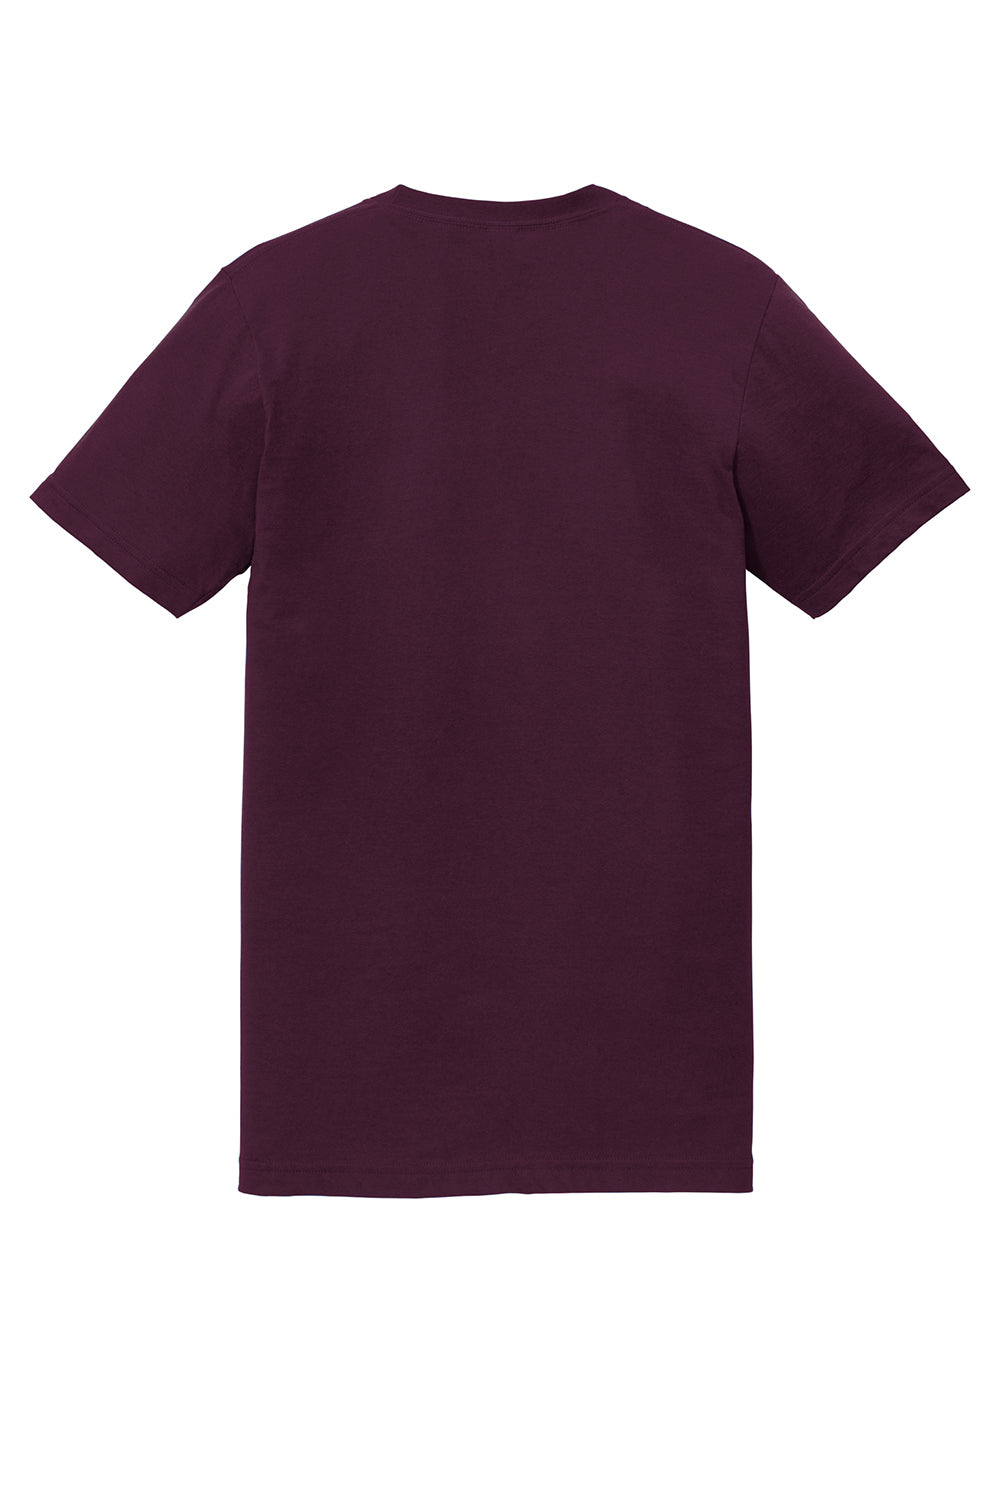 American Apparel 2001 Mens Fine Jersey Short Sleeve Crewneck T-Shirt Eggplant Purple Flat Back